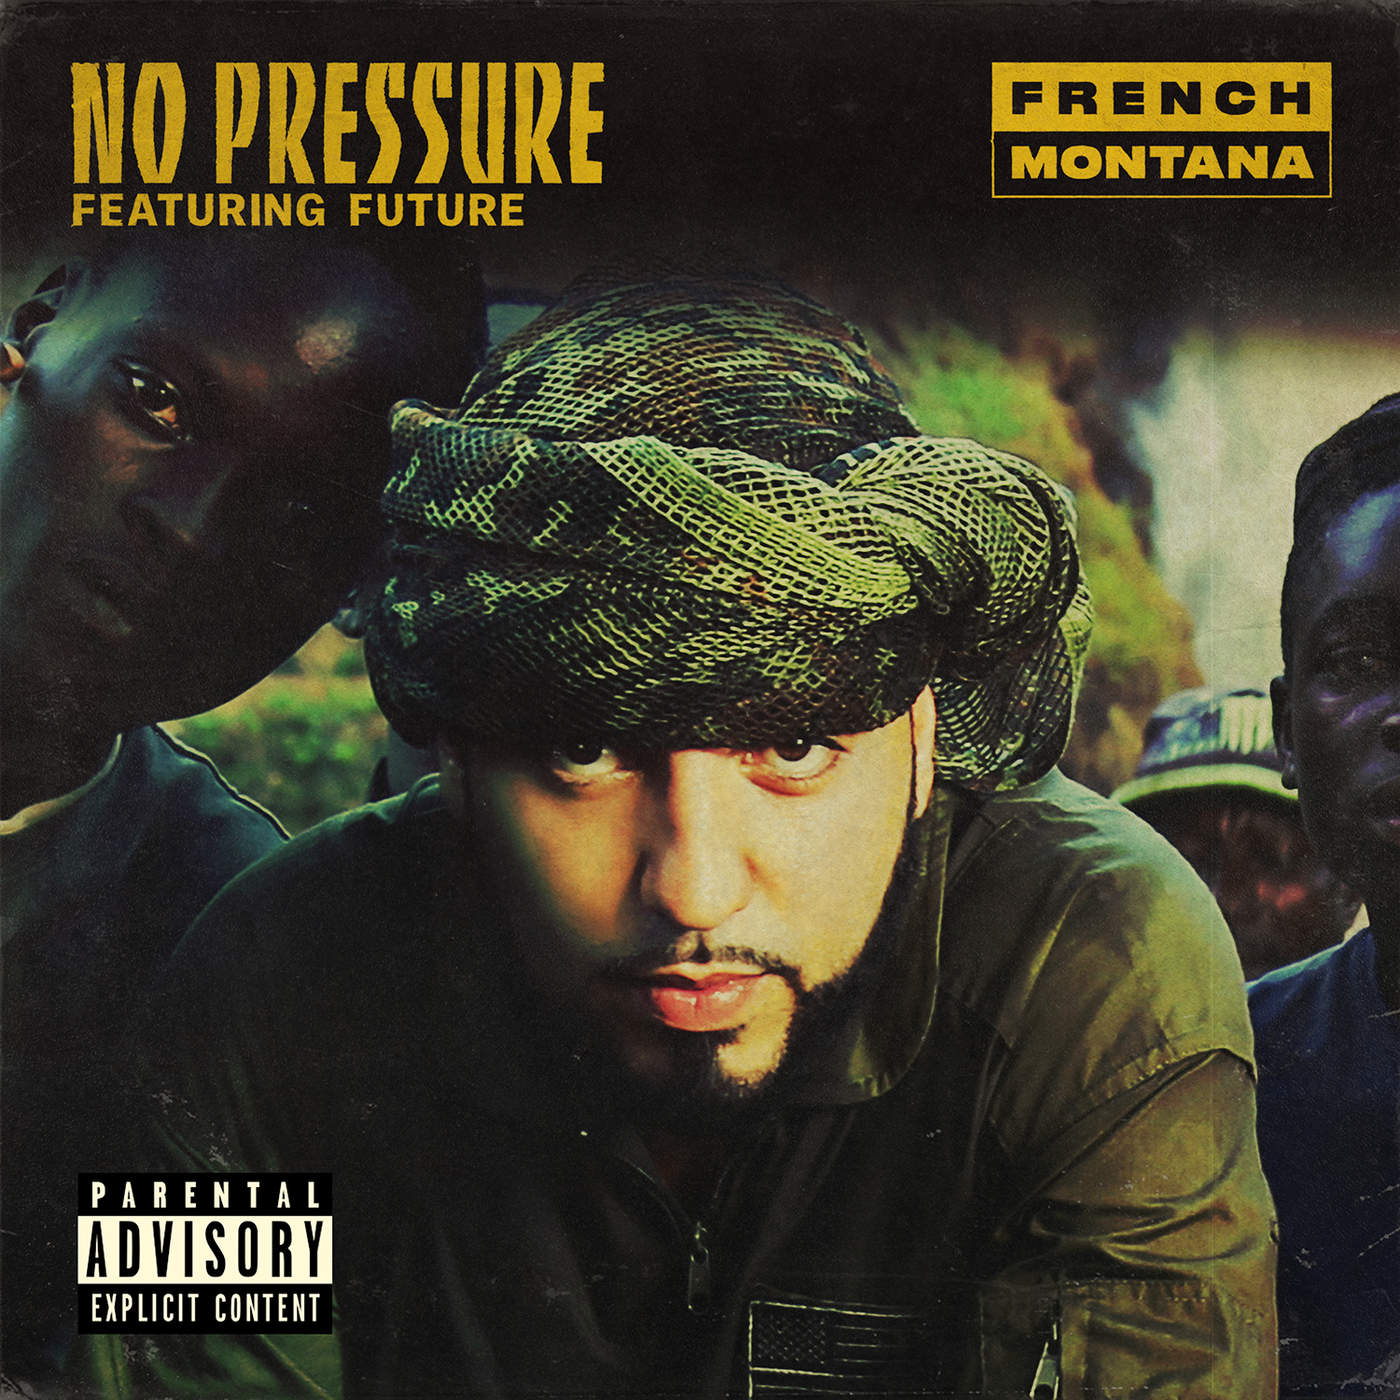 New Music: French Montana – “No Pressure” Feat. Future [LISTEN]